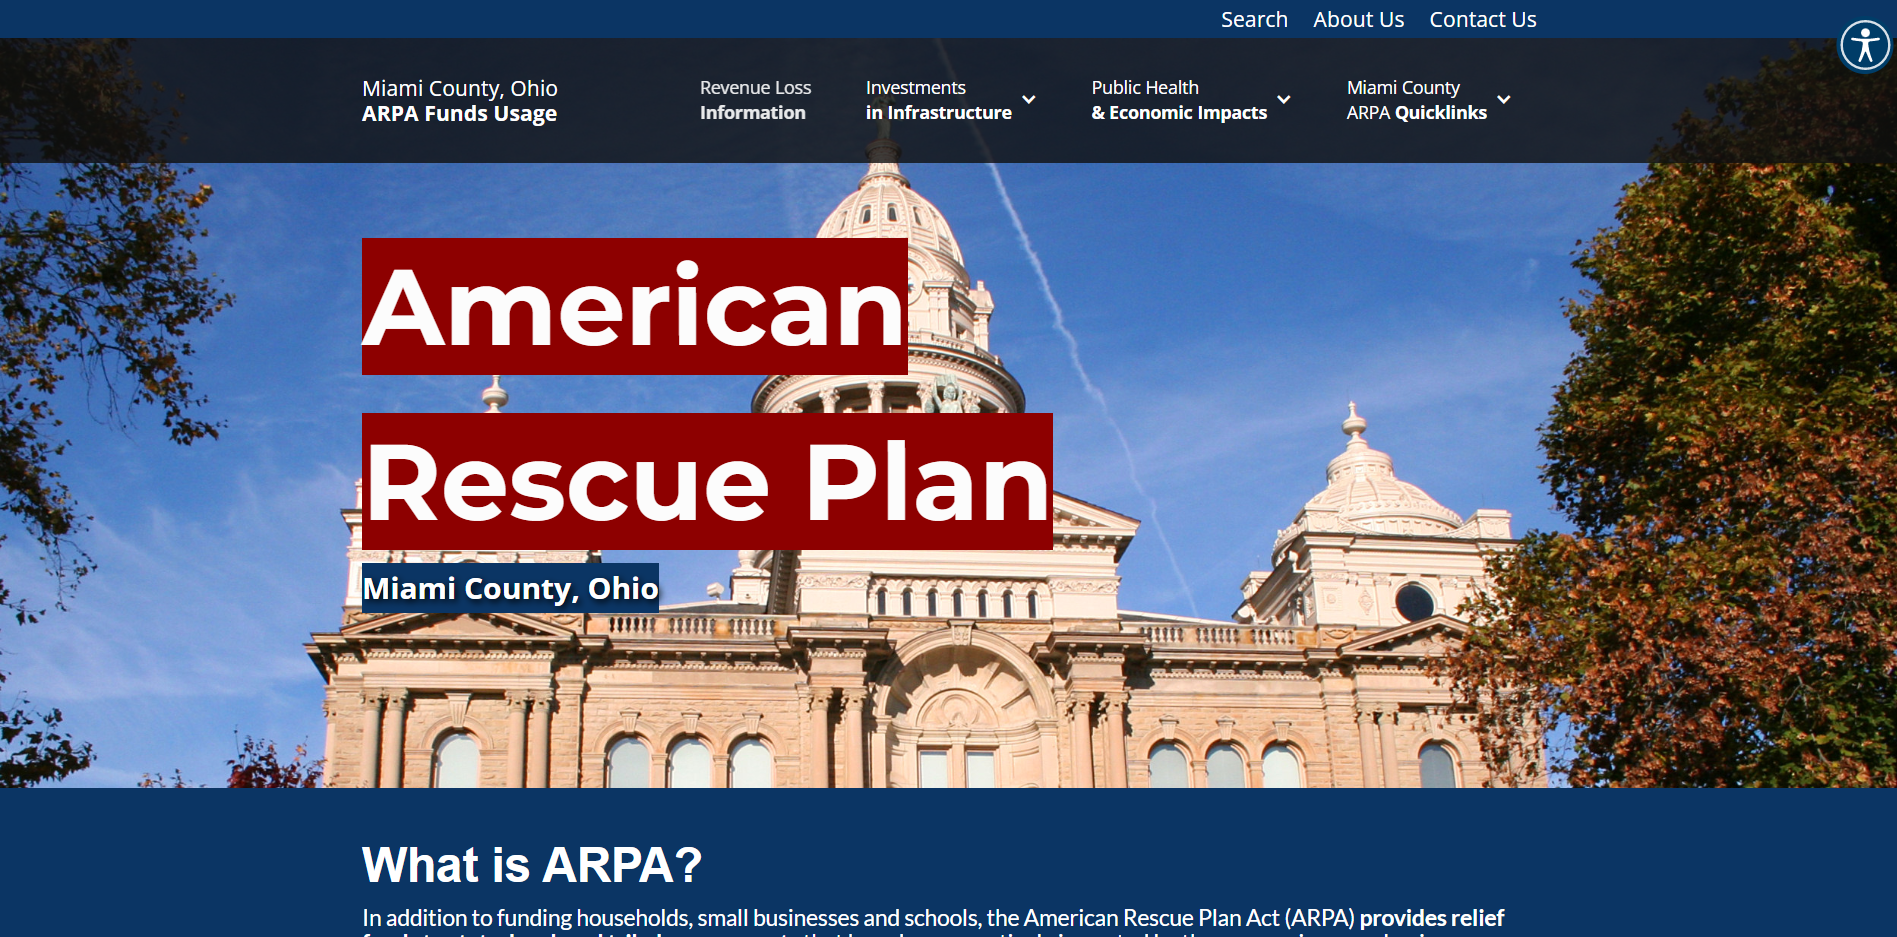 Miami County ARPA Website Image